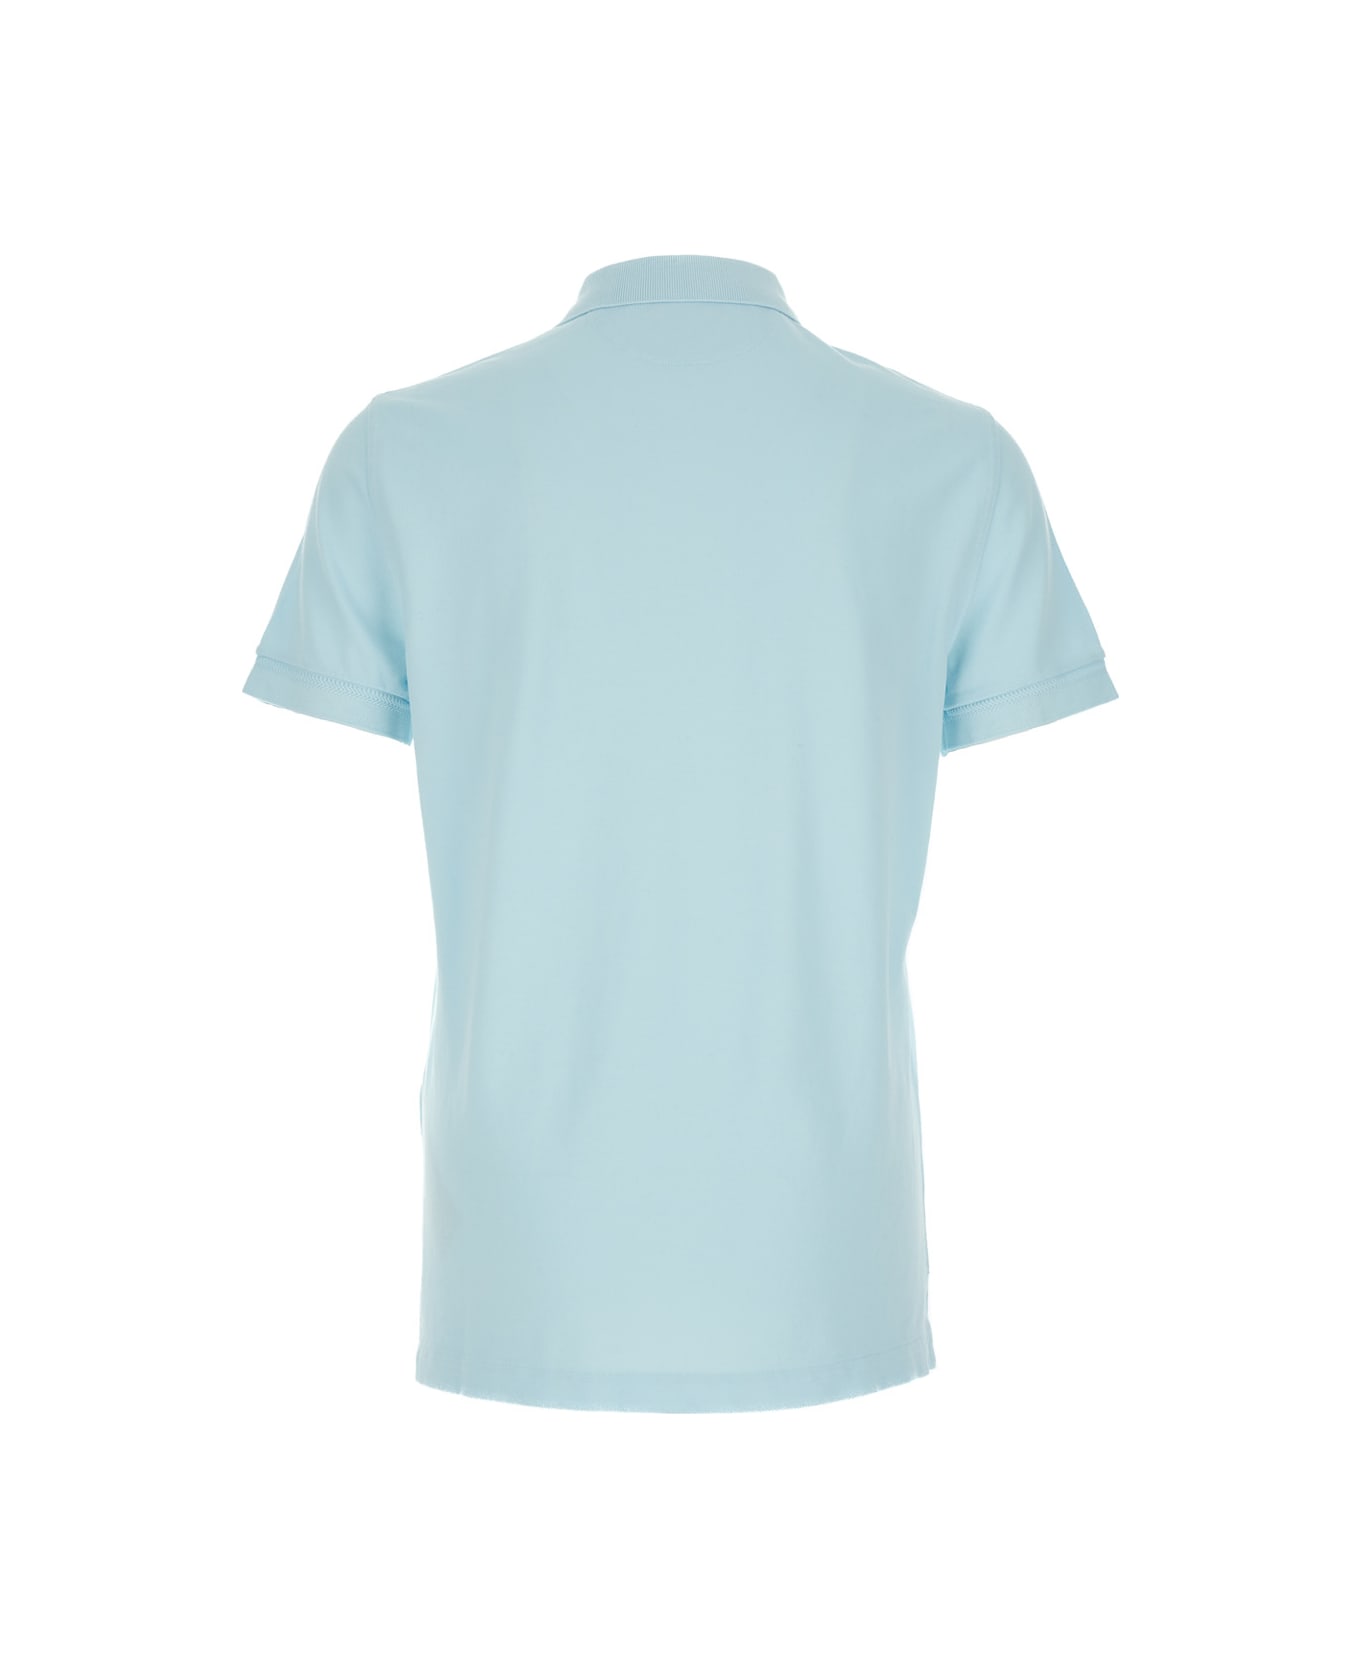 Tom Ford Light-blue Piquet Polo T-shirt In Cotton Man - Light blue